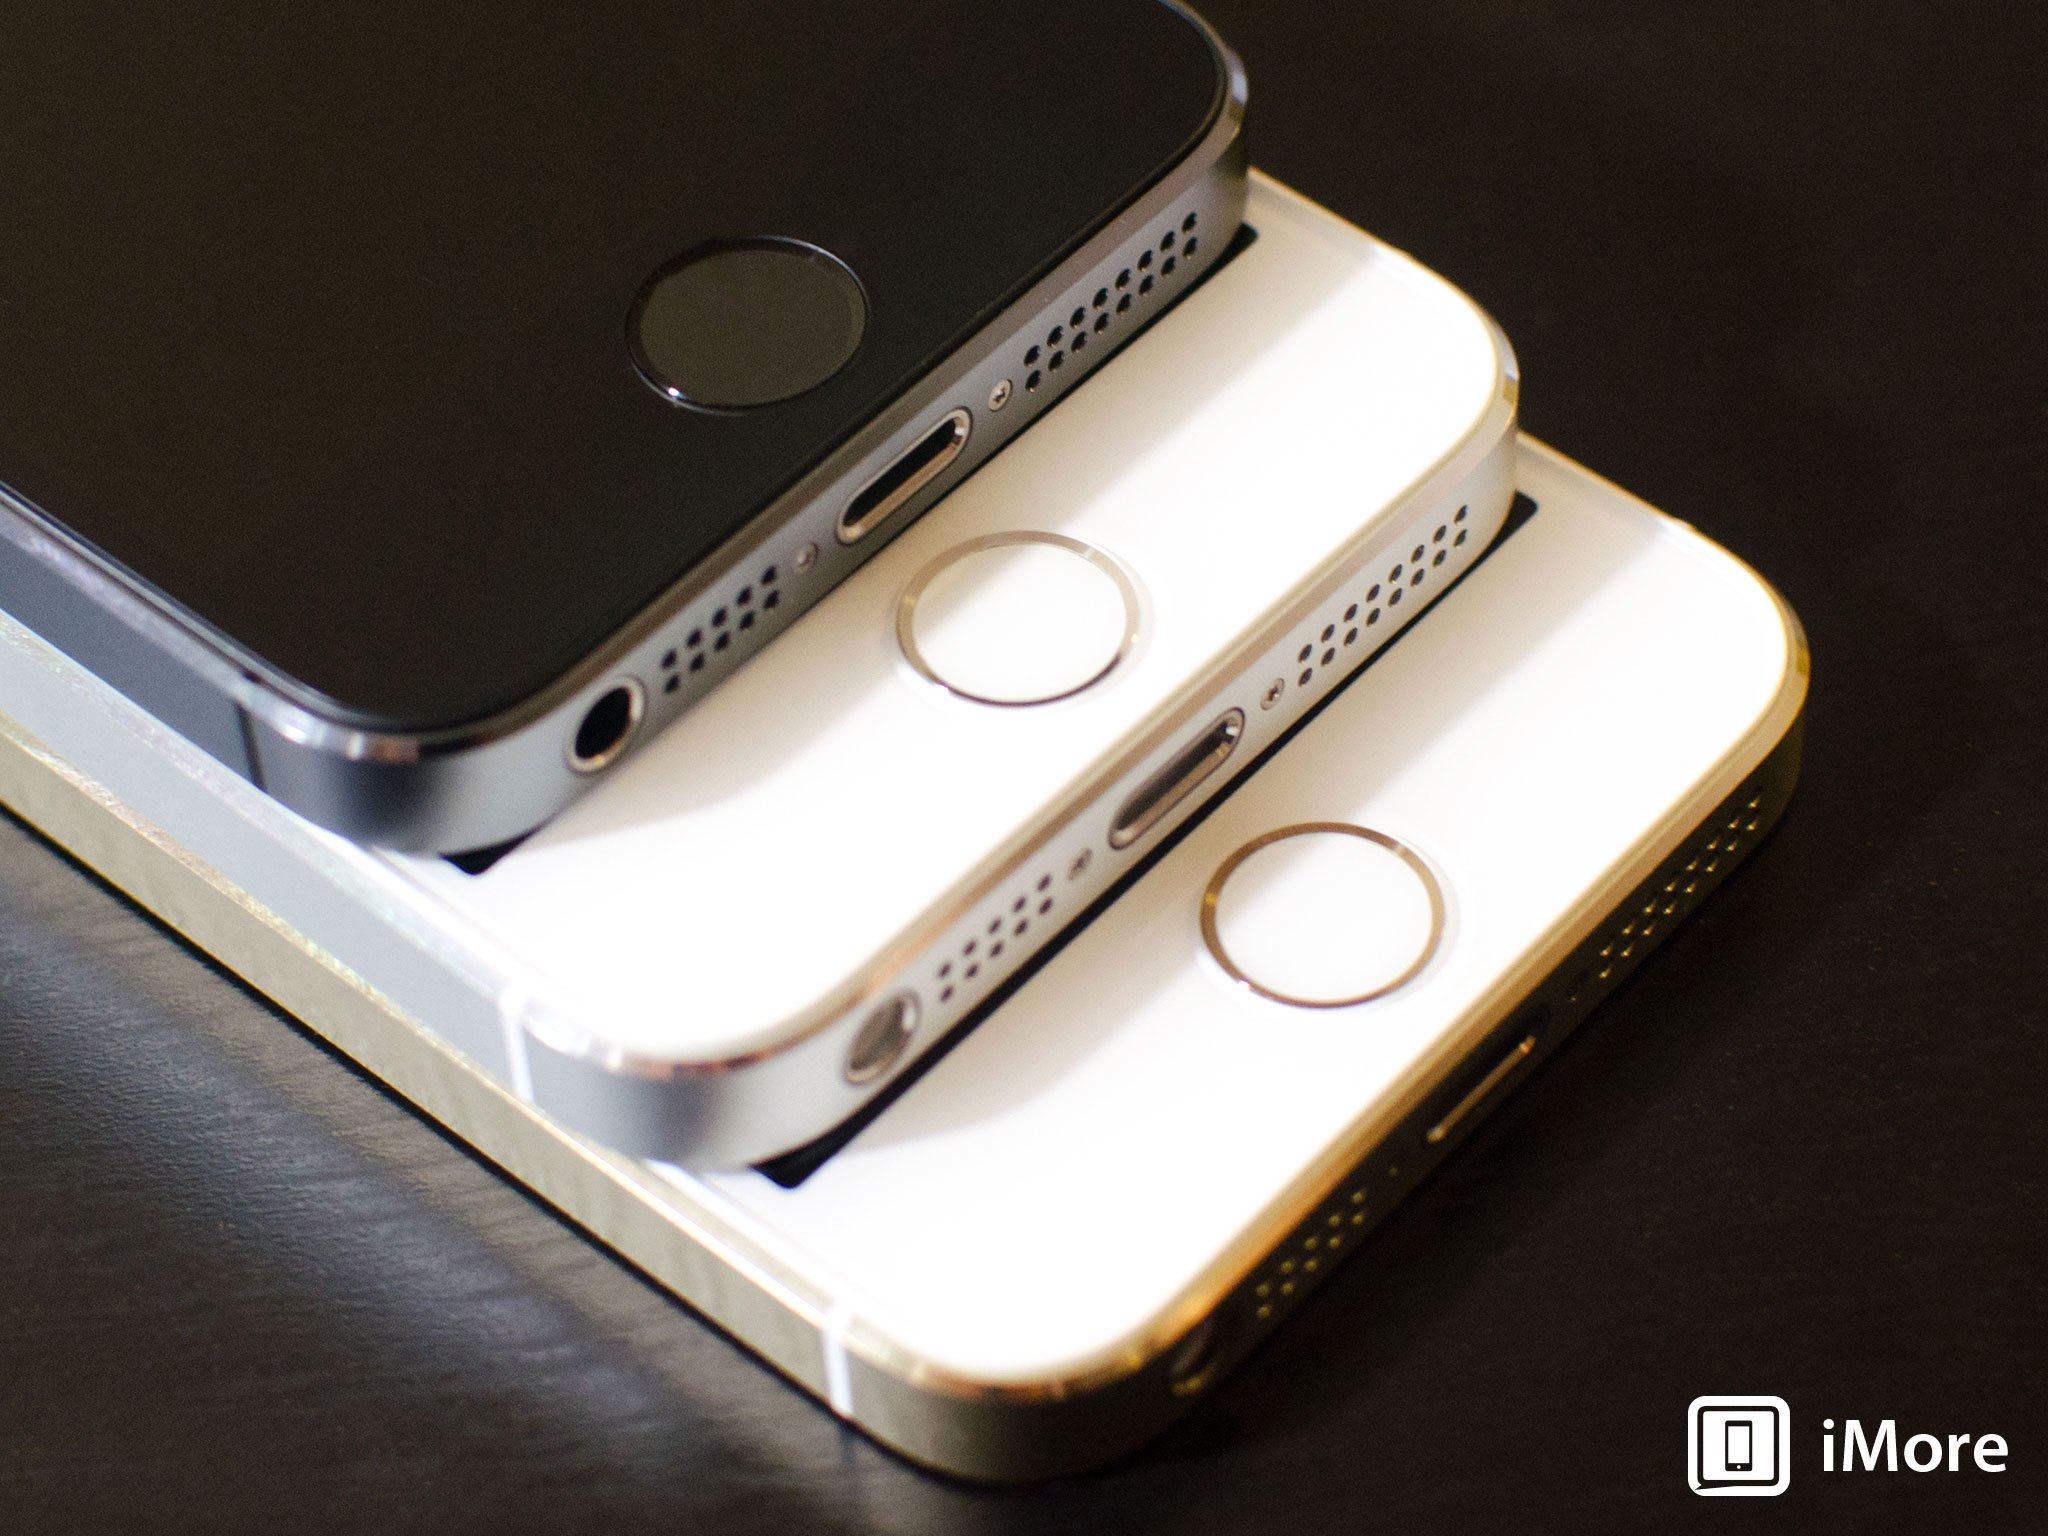 iPhone 5s Touch ID fingerprint identification sensor